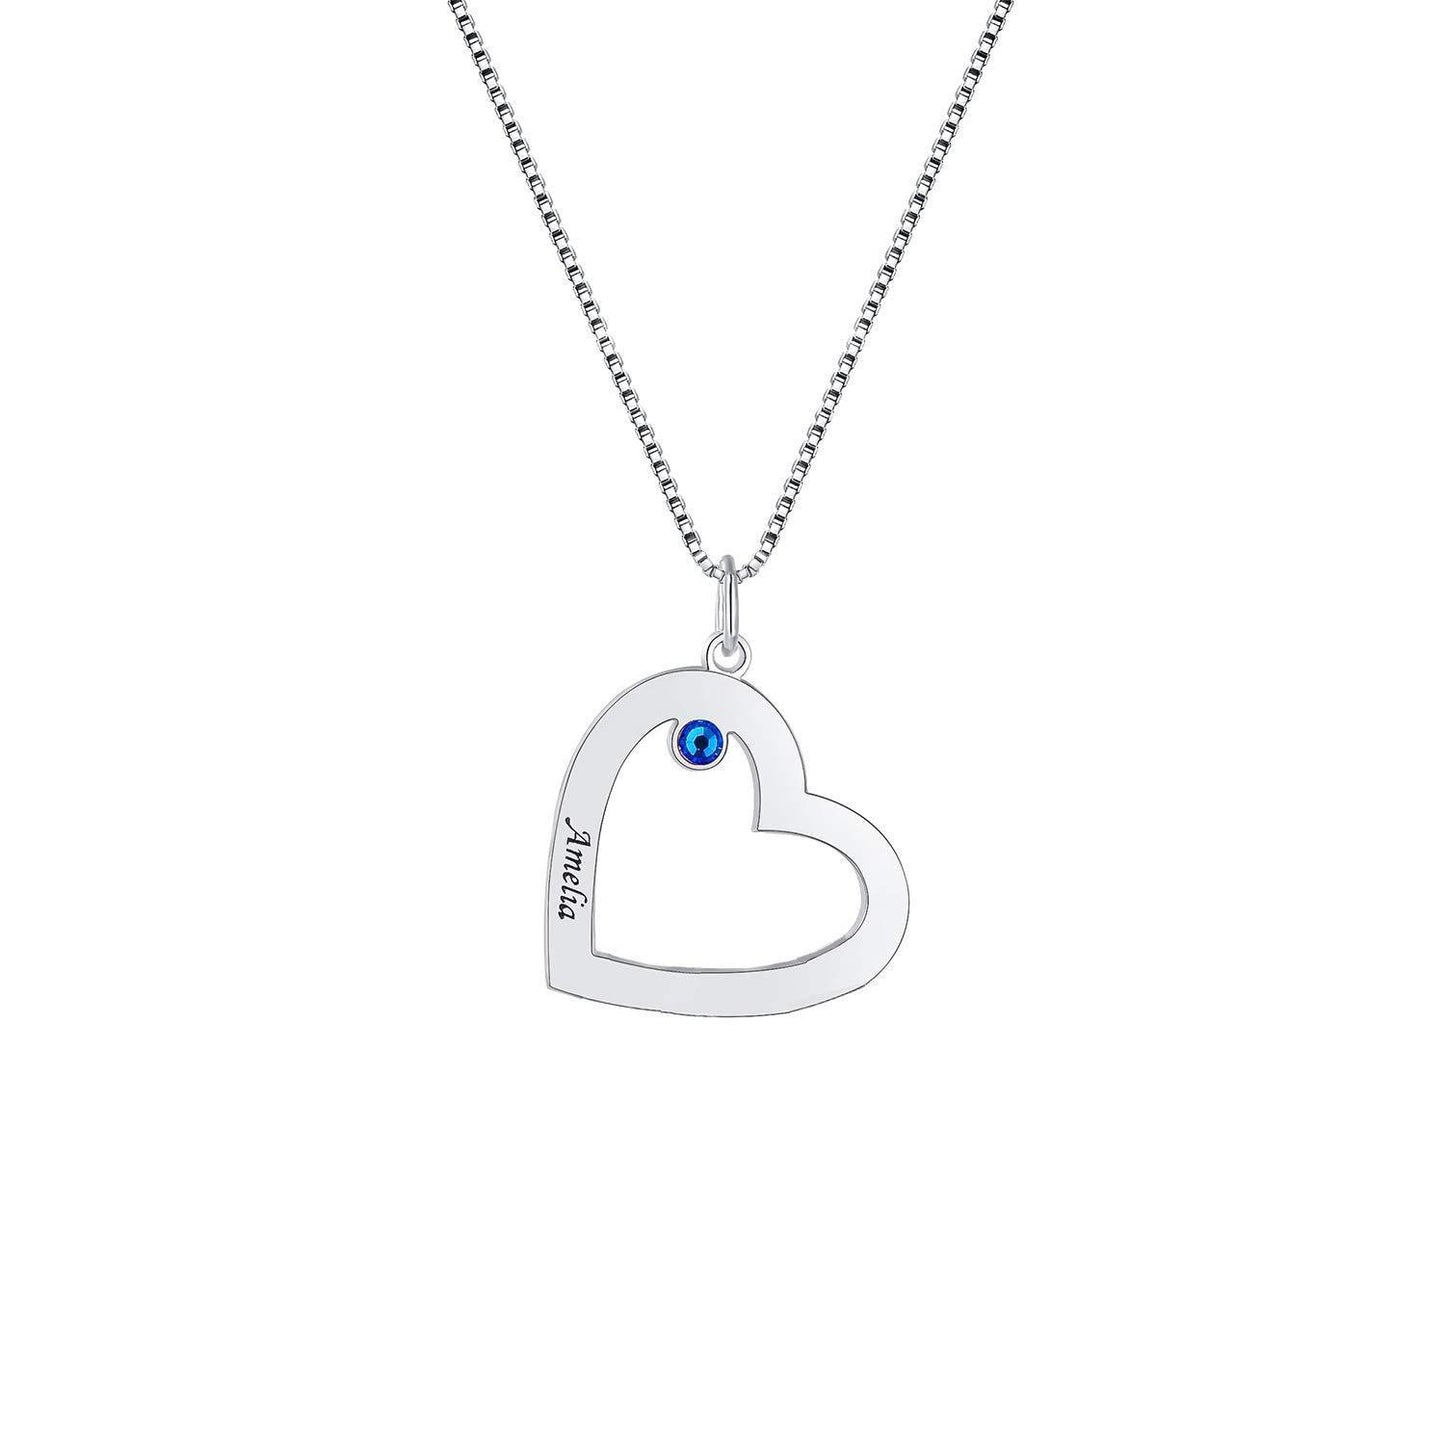 N18.Custom Heart Engraved Name Birthstone Necklace - Elle Royal Jewelry